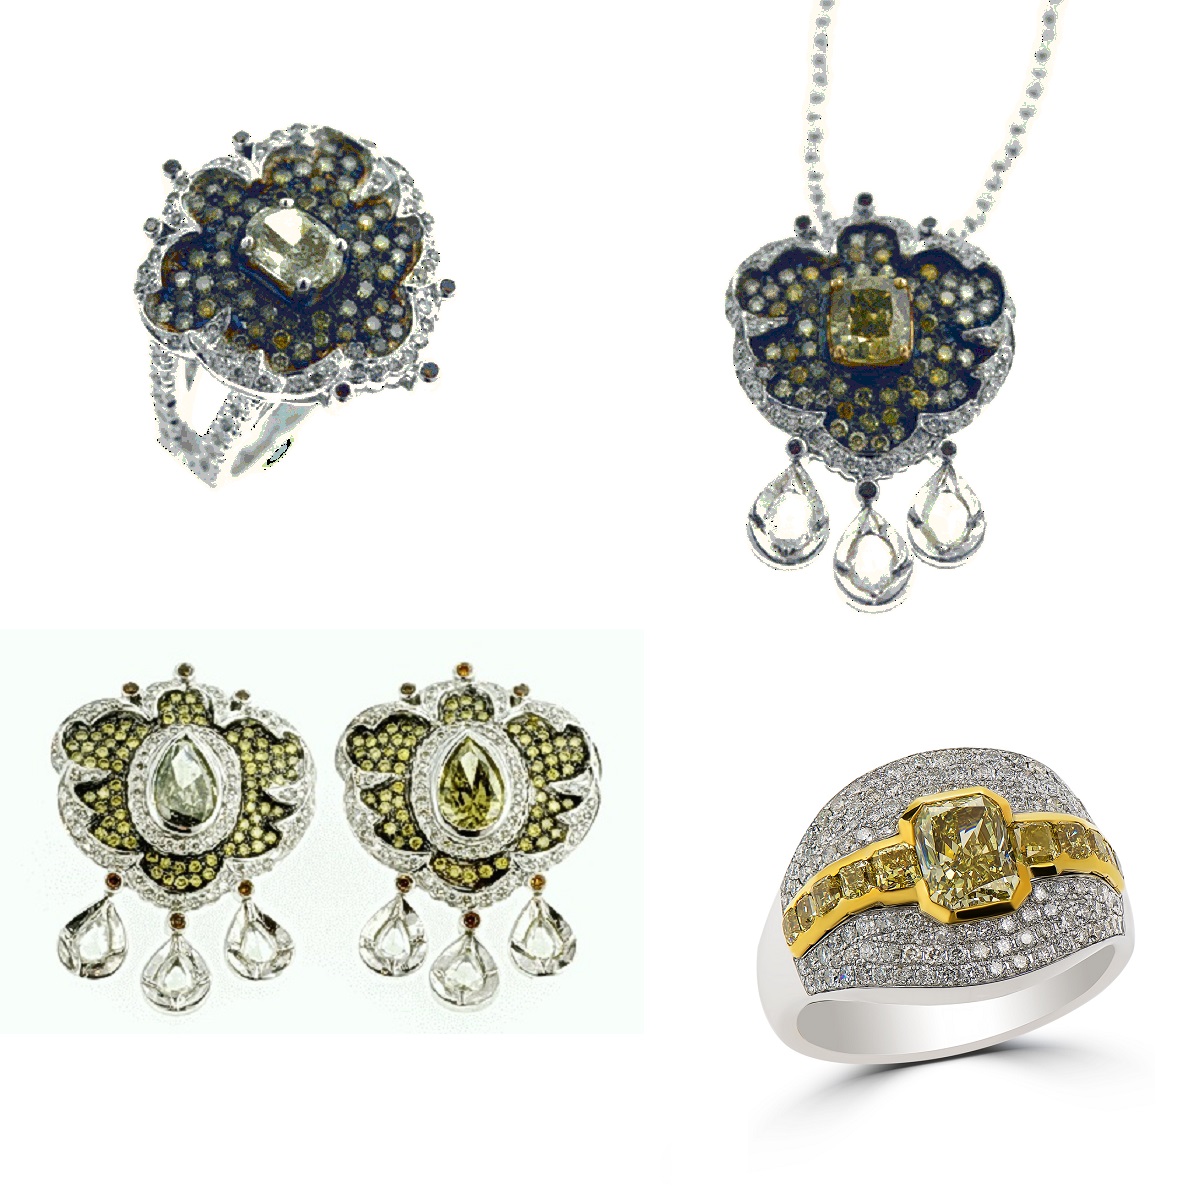 Fancy Vivid / Intense Greenish Yellow Lady’s & Gent’s Diamond Rings & Pendant with CHAMELEON Diamond Earrings (15.15ct TW)